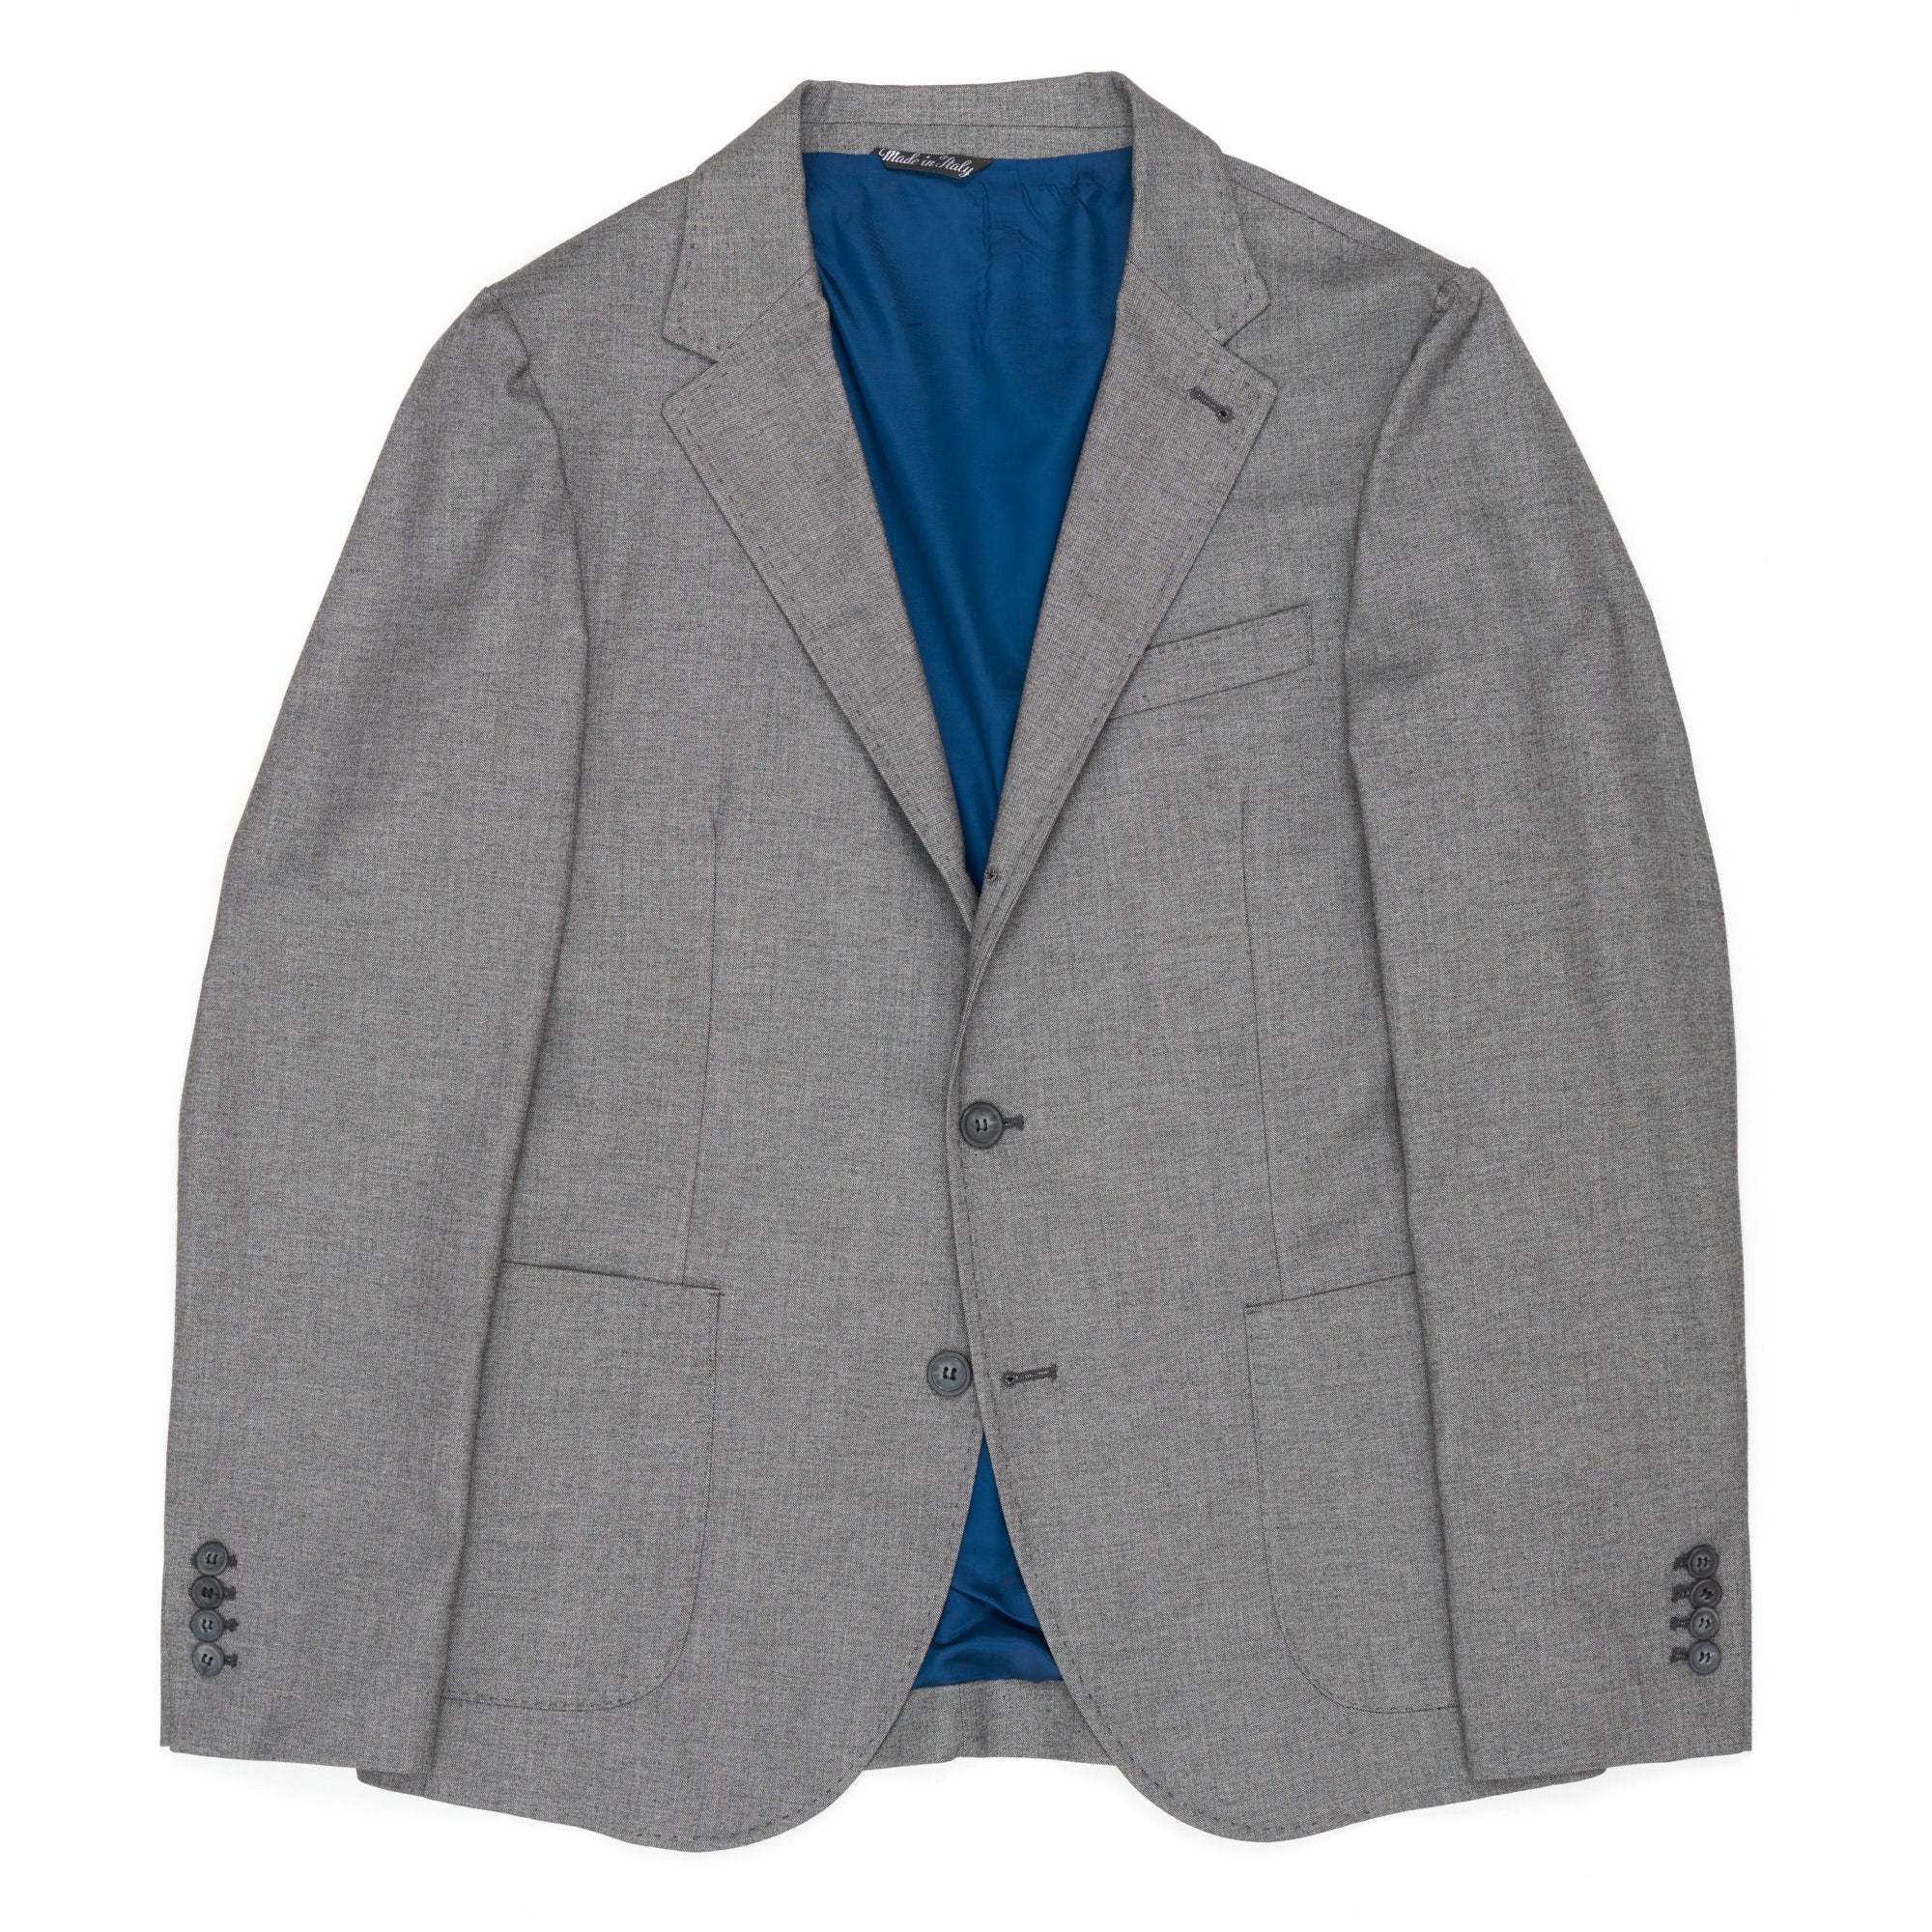 VINCENZO PALUMBO Napoli "Alfred" Gray Wool Sport Coat Jacket NEW Slim Fit